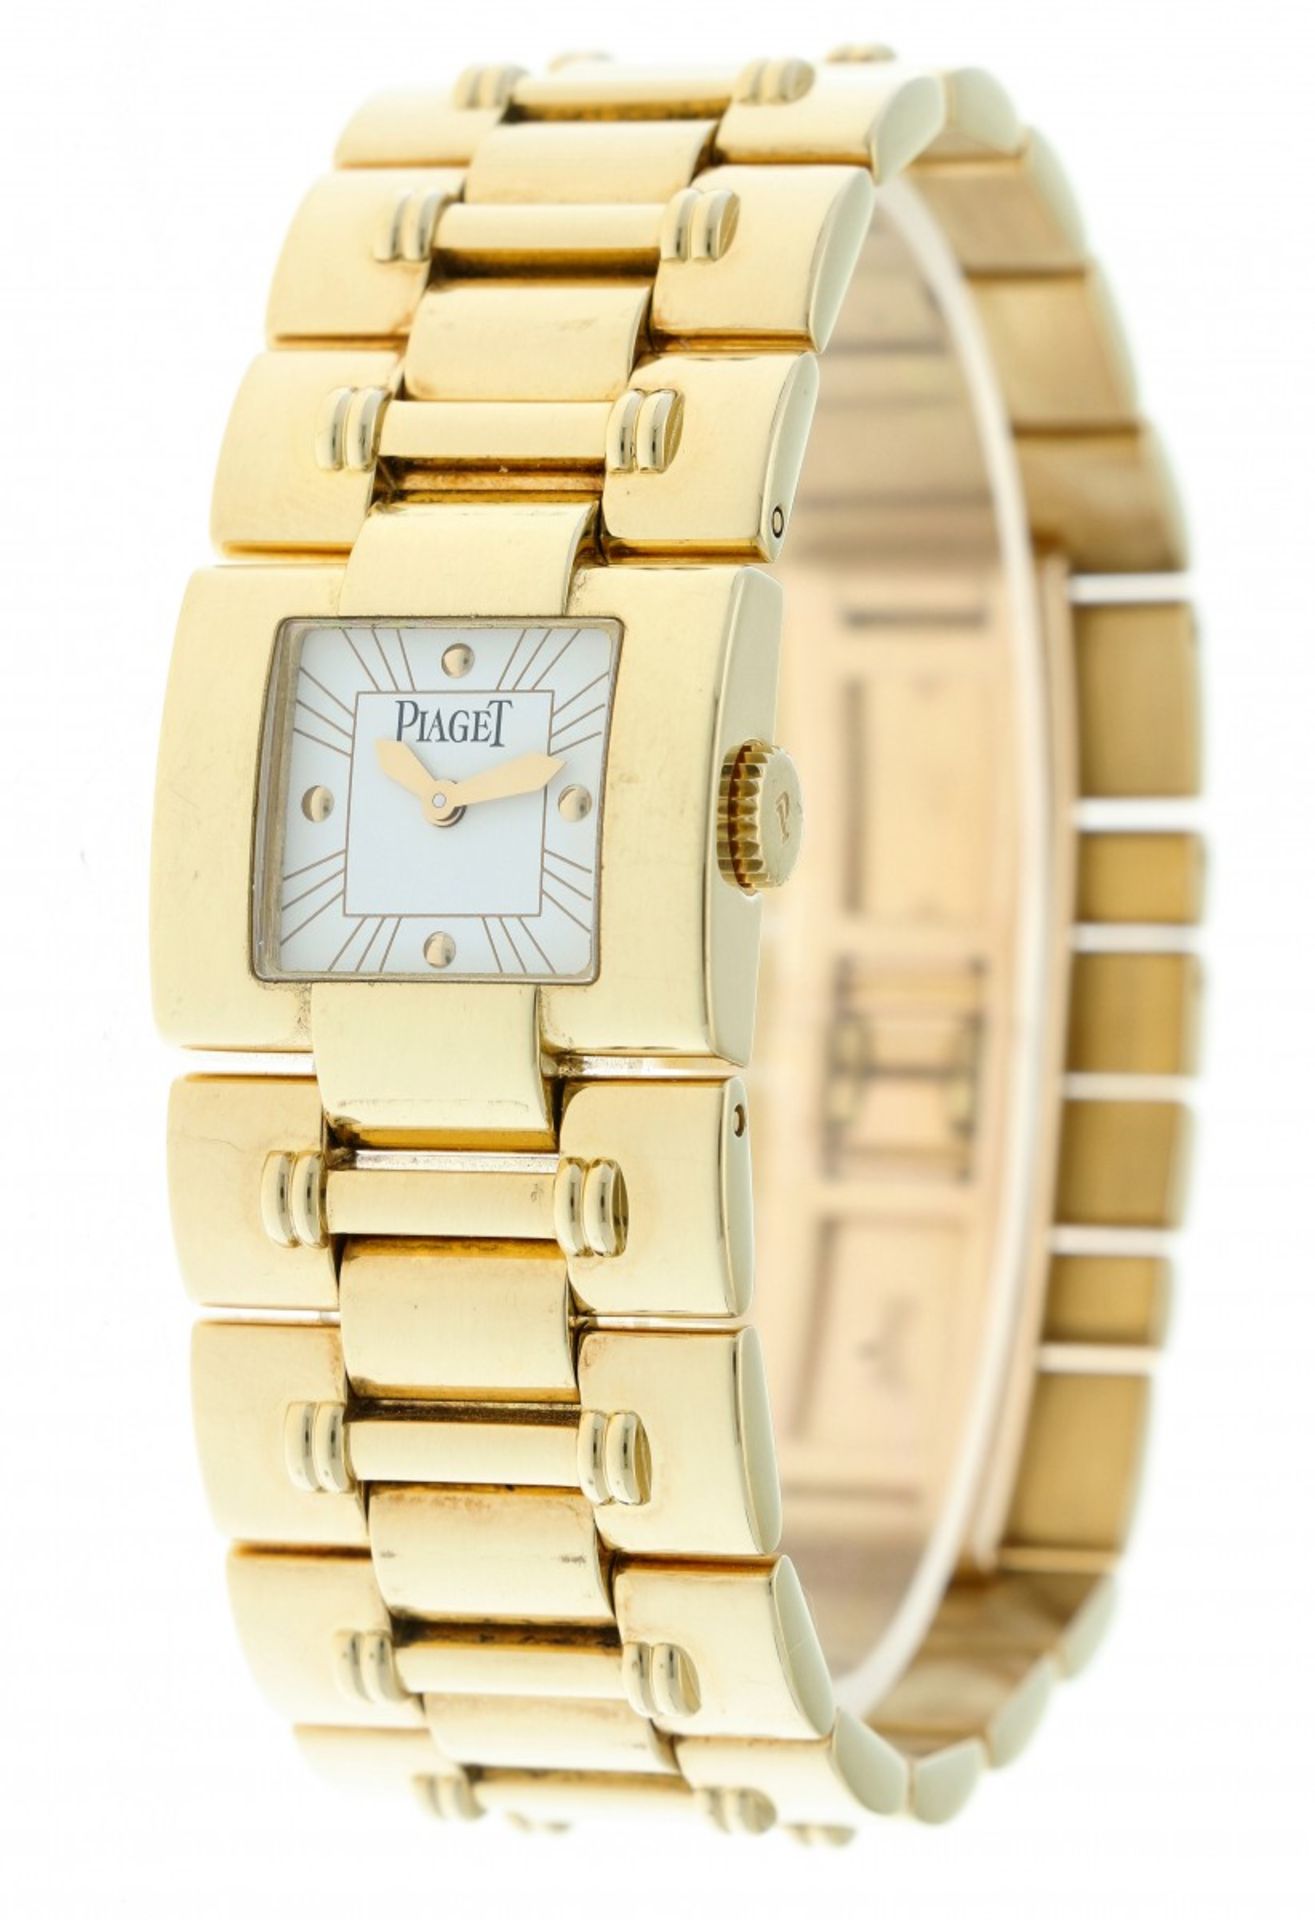 Piaget - 18k Ladies Watch - appr. 2000 - Image 2 of 5